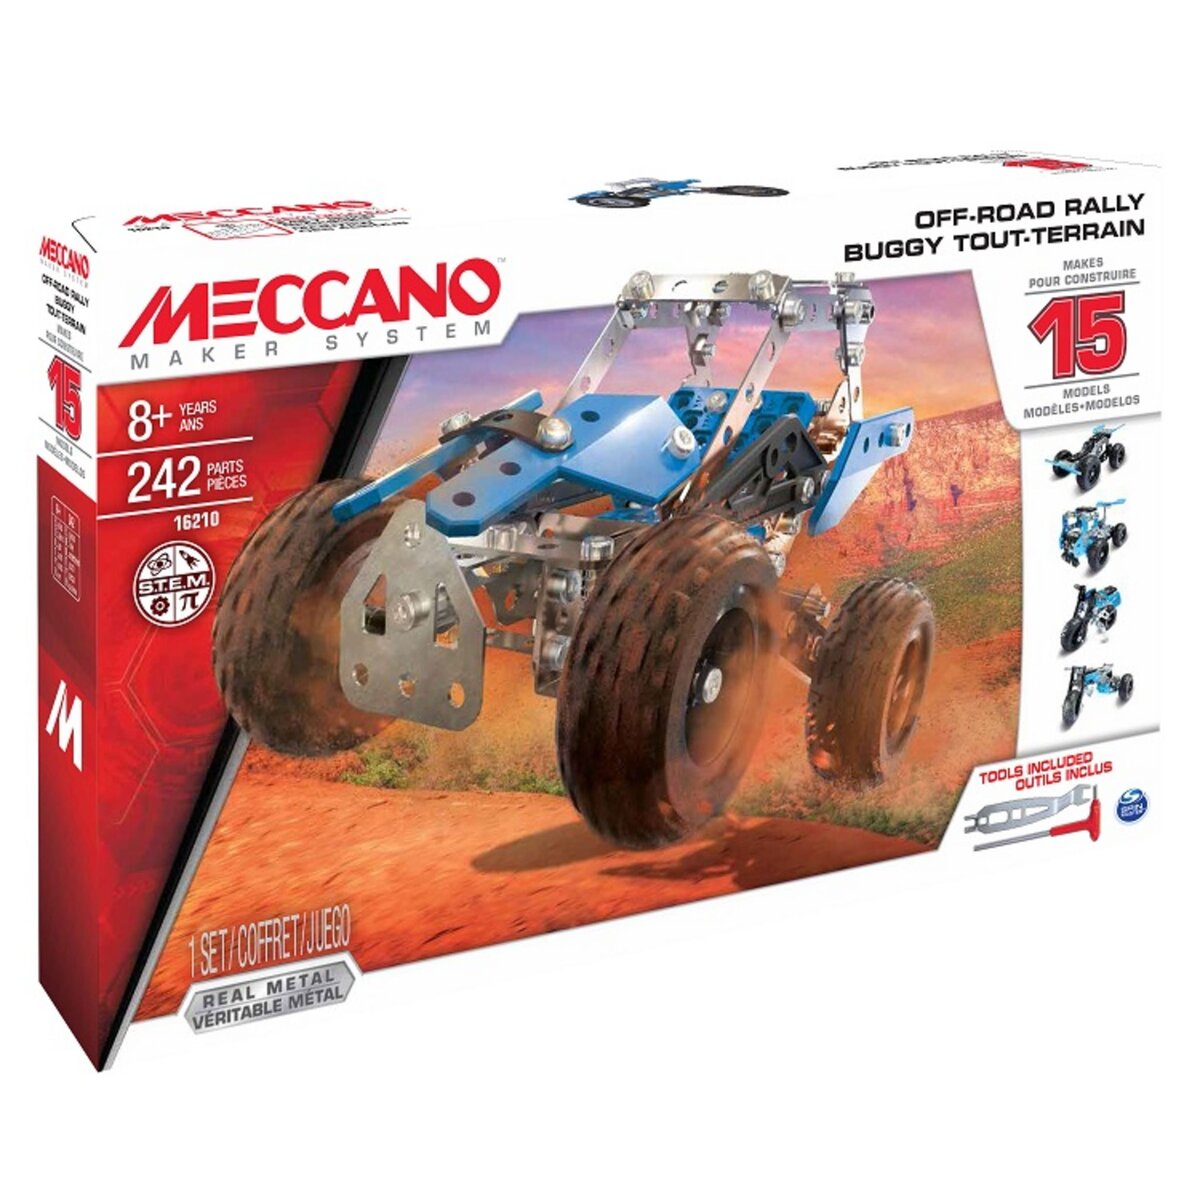 MECCANO Meccano buggy - 15 modèles